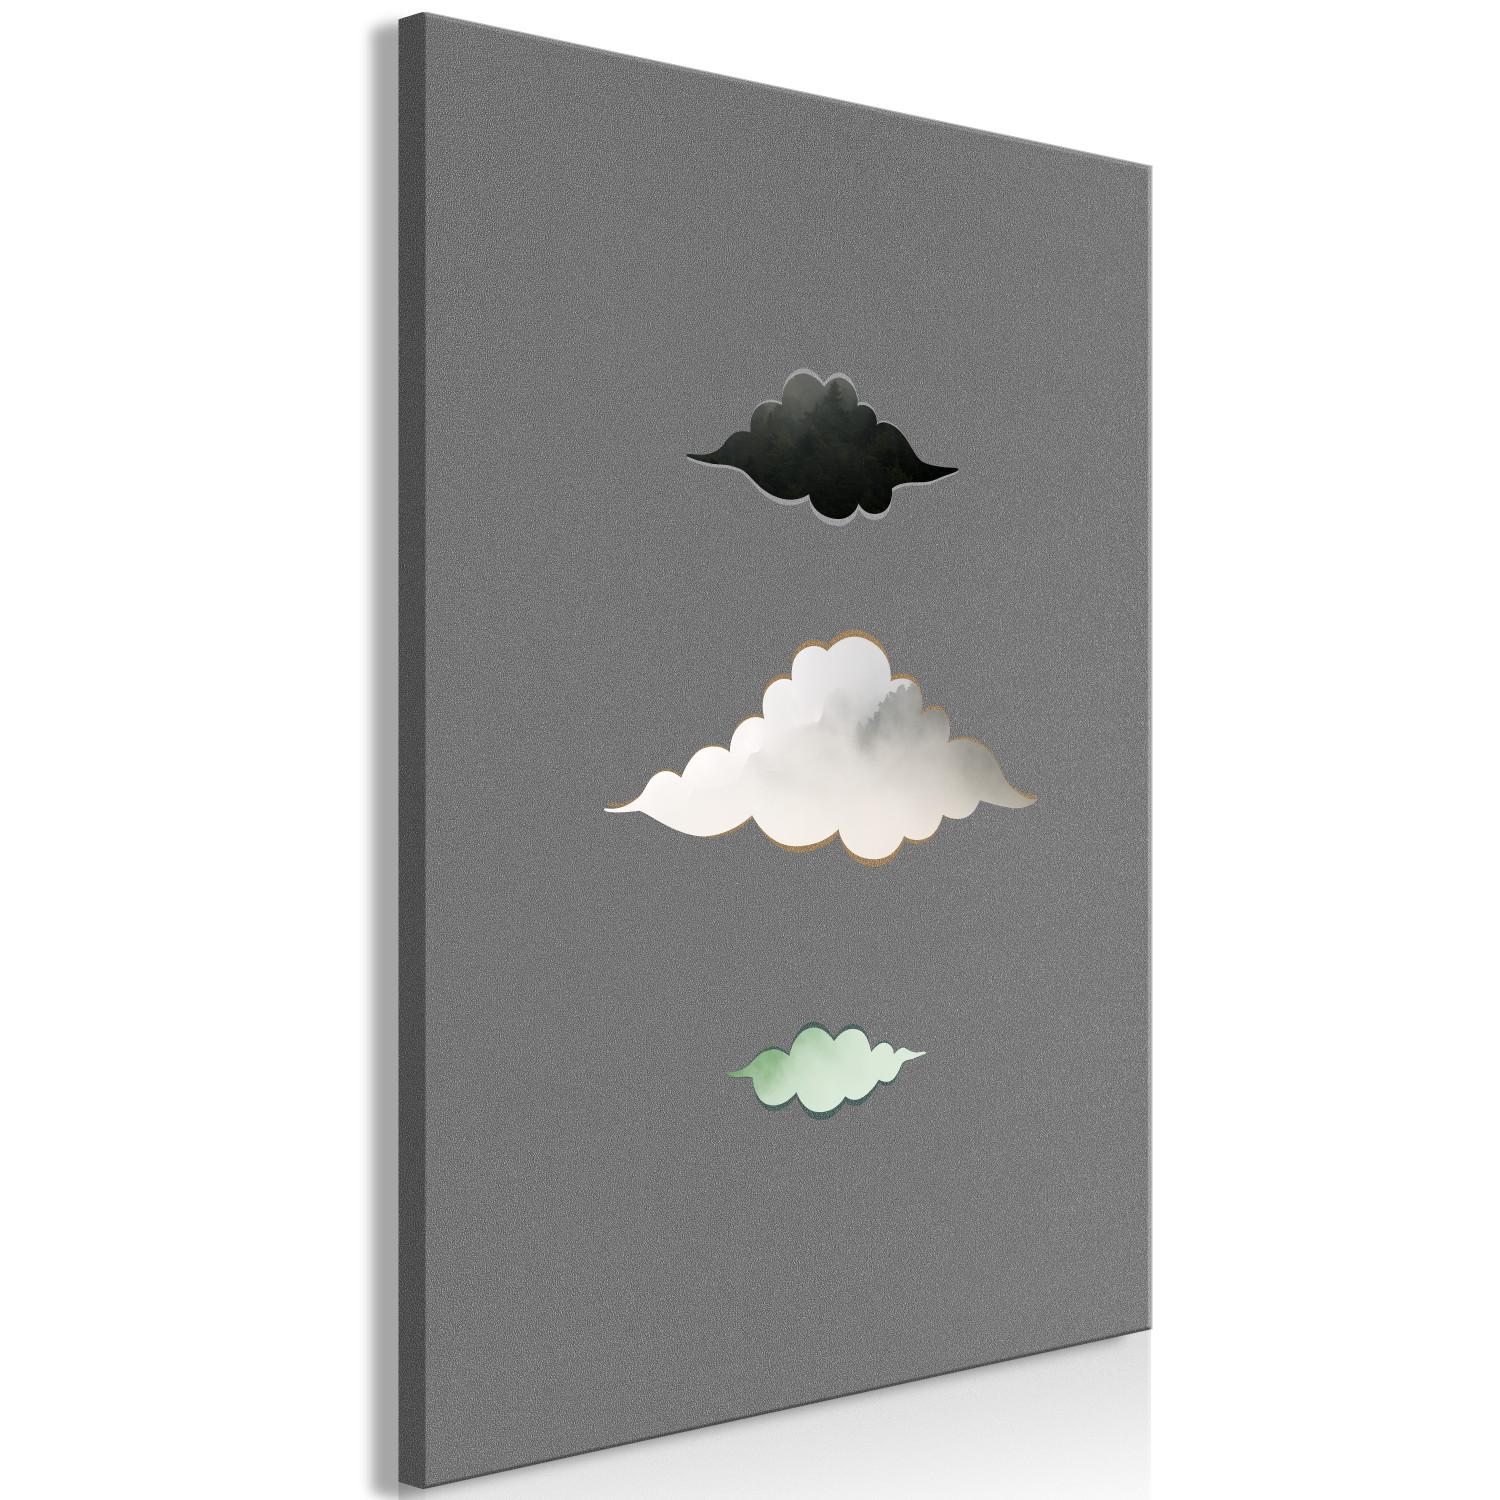 Cuadro moderno Nubes abstractas - varias nubes coloridas sobre un fondo gris